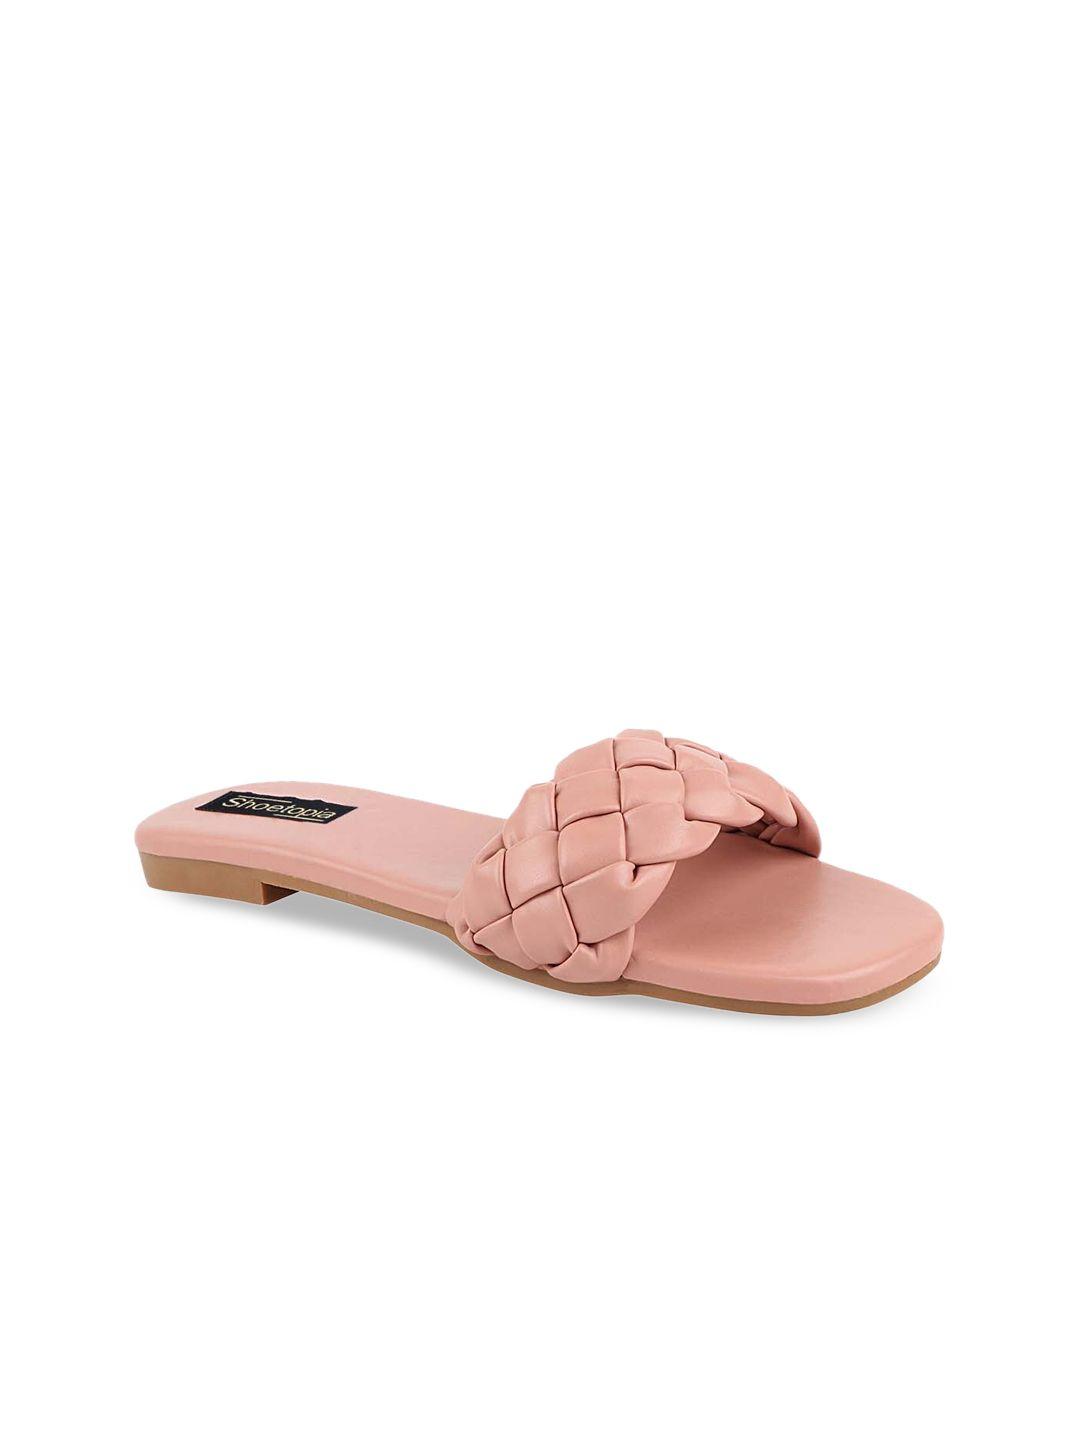 shoetopia girls peach-coloured open toe flats